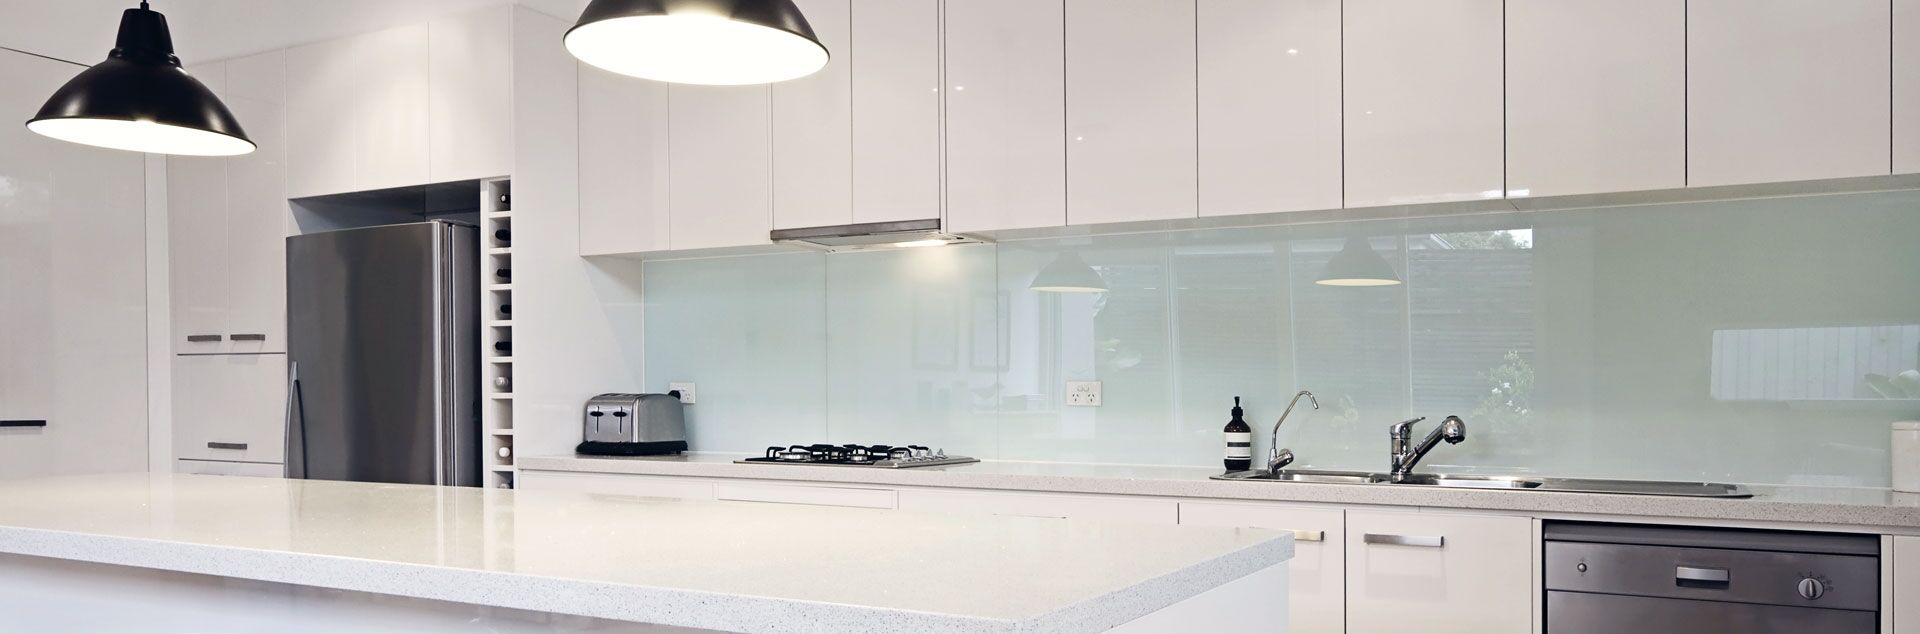 kitchen glass backsplash ideas